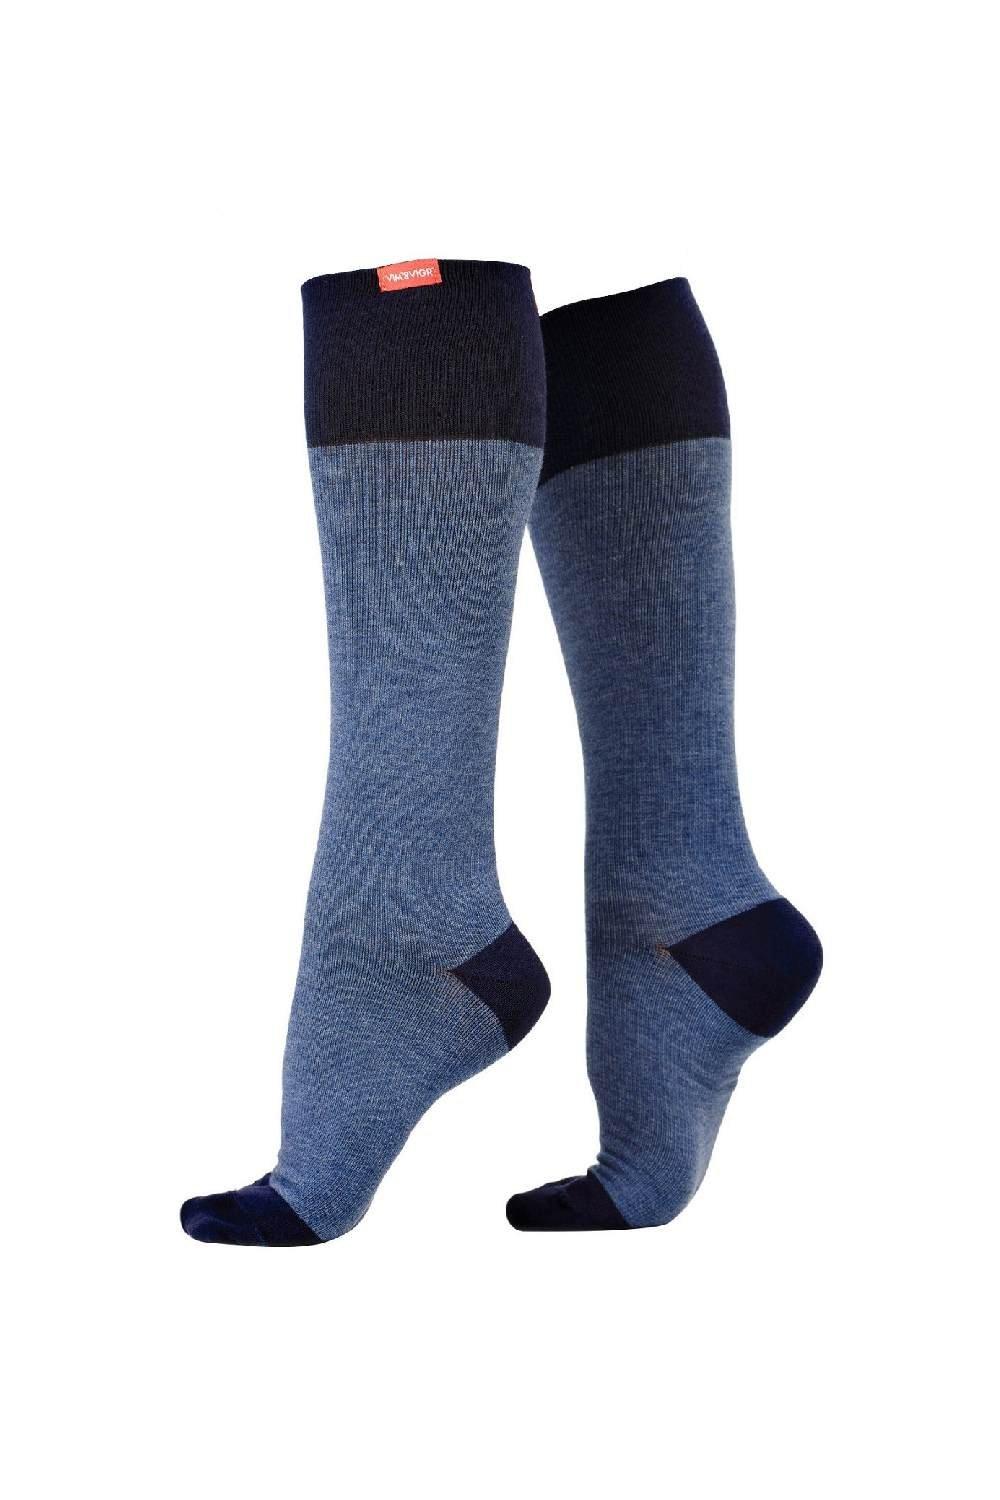 Graduated Compression 15-20 mmhg Cotton Socks for Swollen Legs & DVT